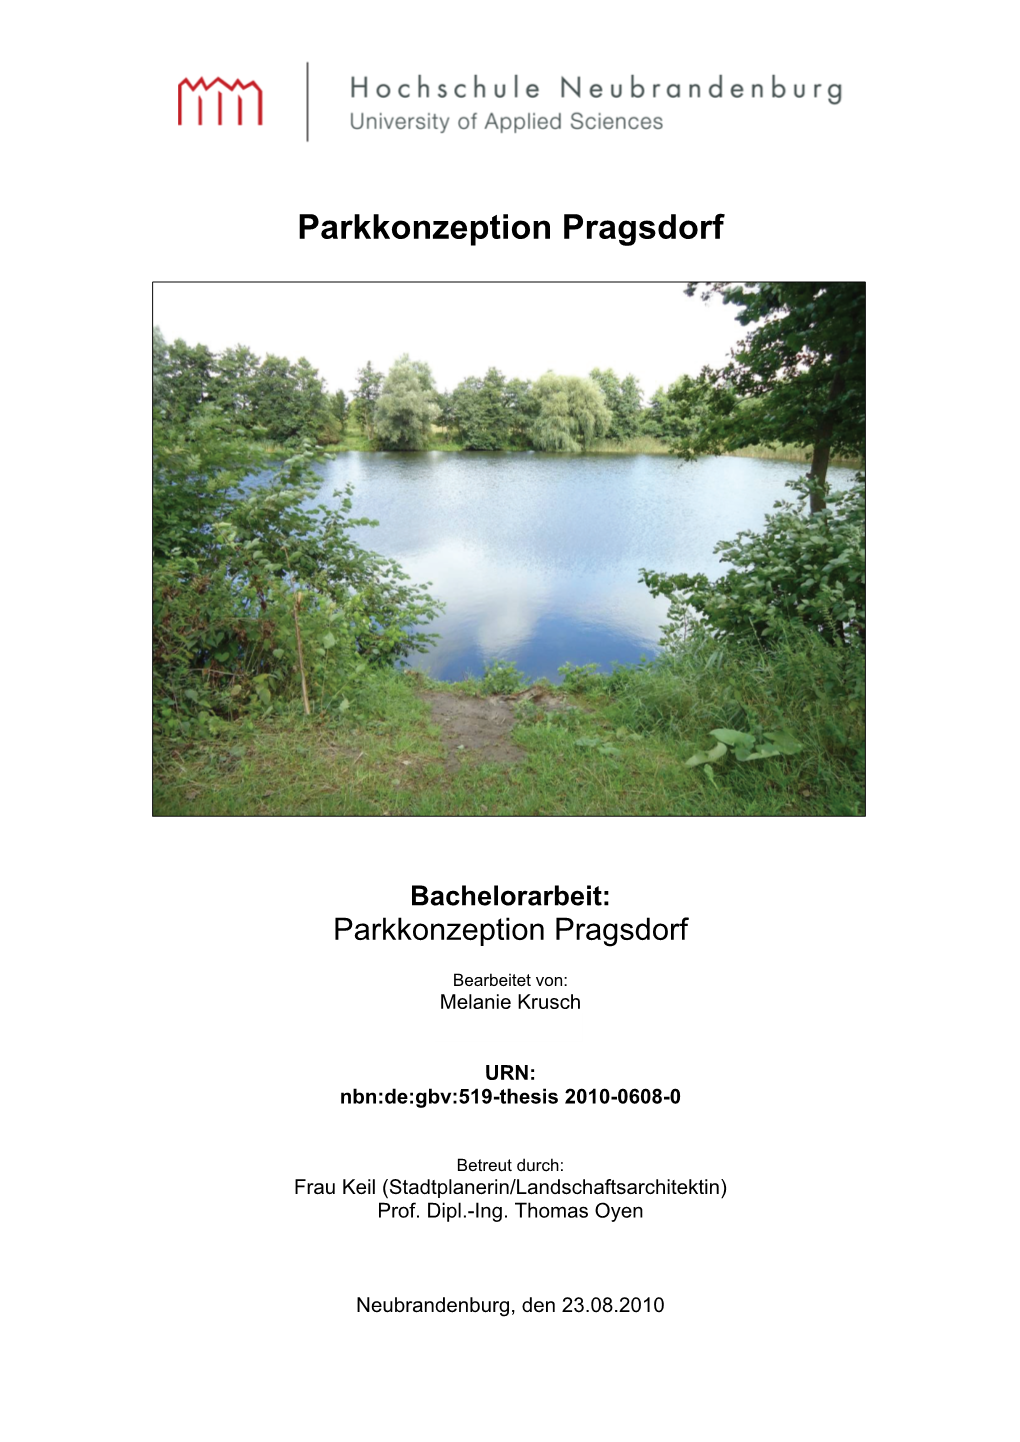 Parkkonzeption Pragsdorf